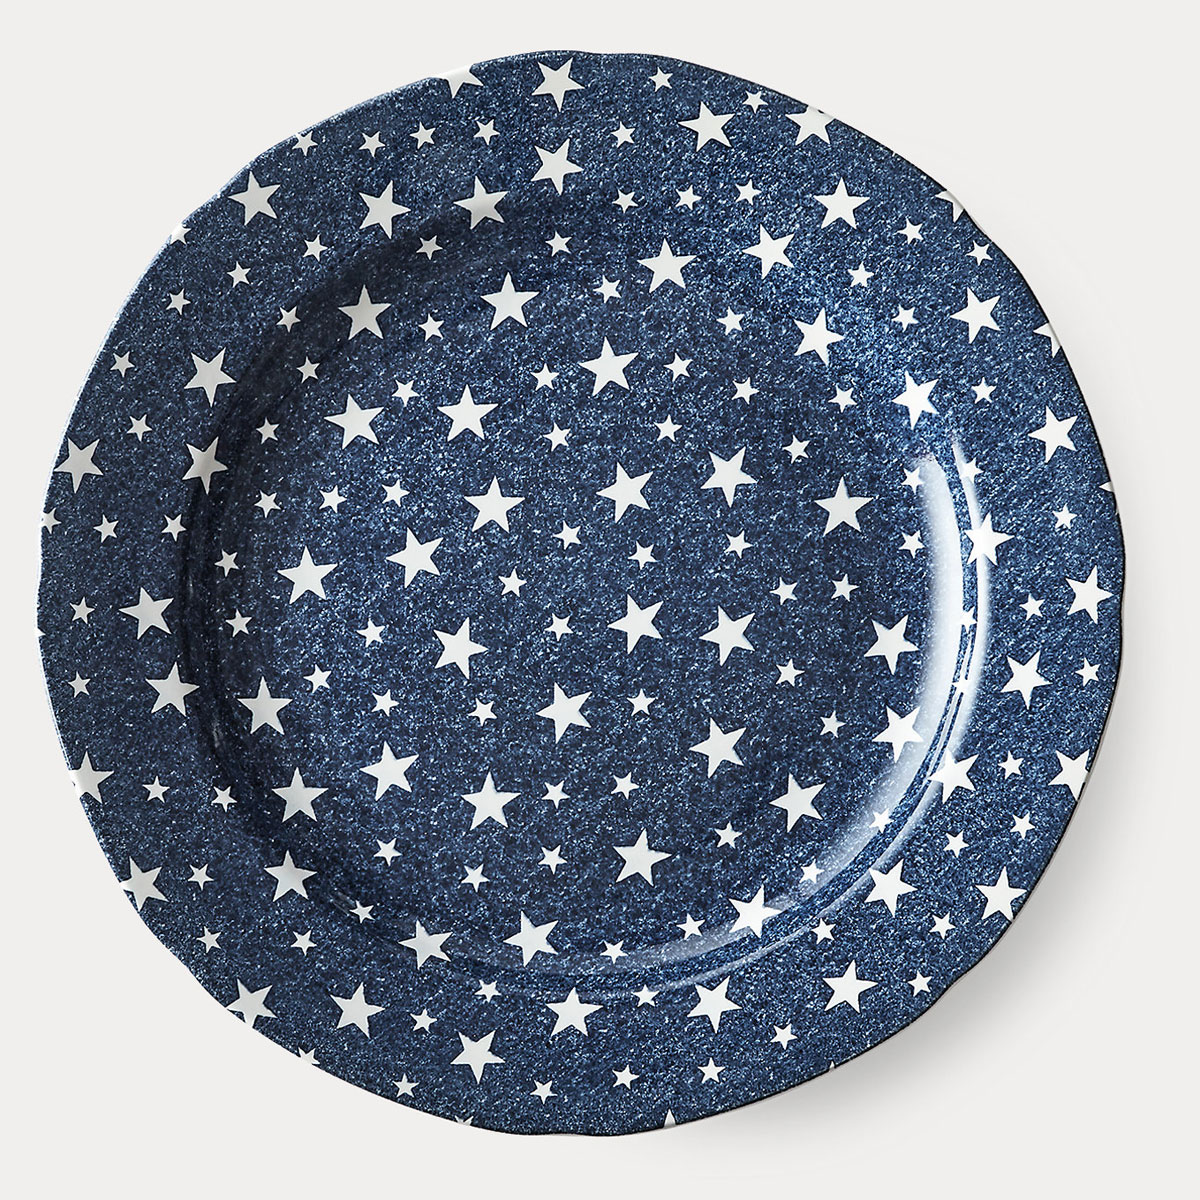 Ralph Lauren Midnight Sky Dinner Plate, Indigo